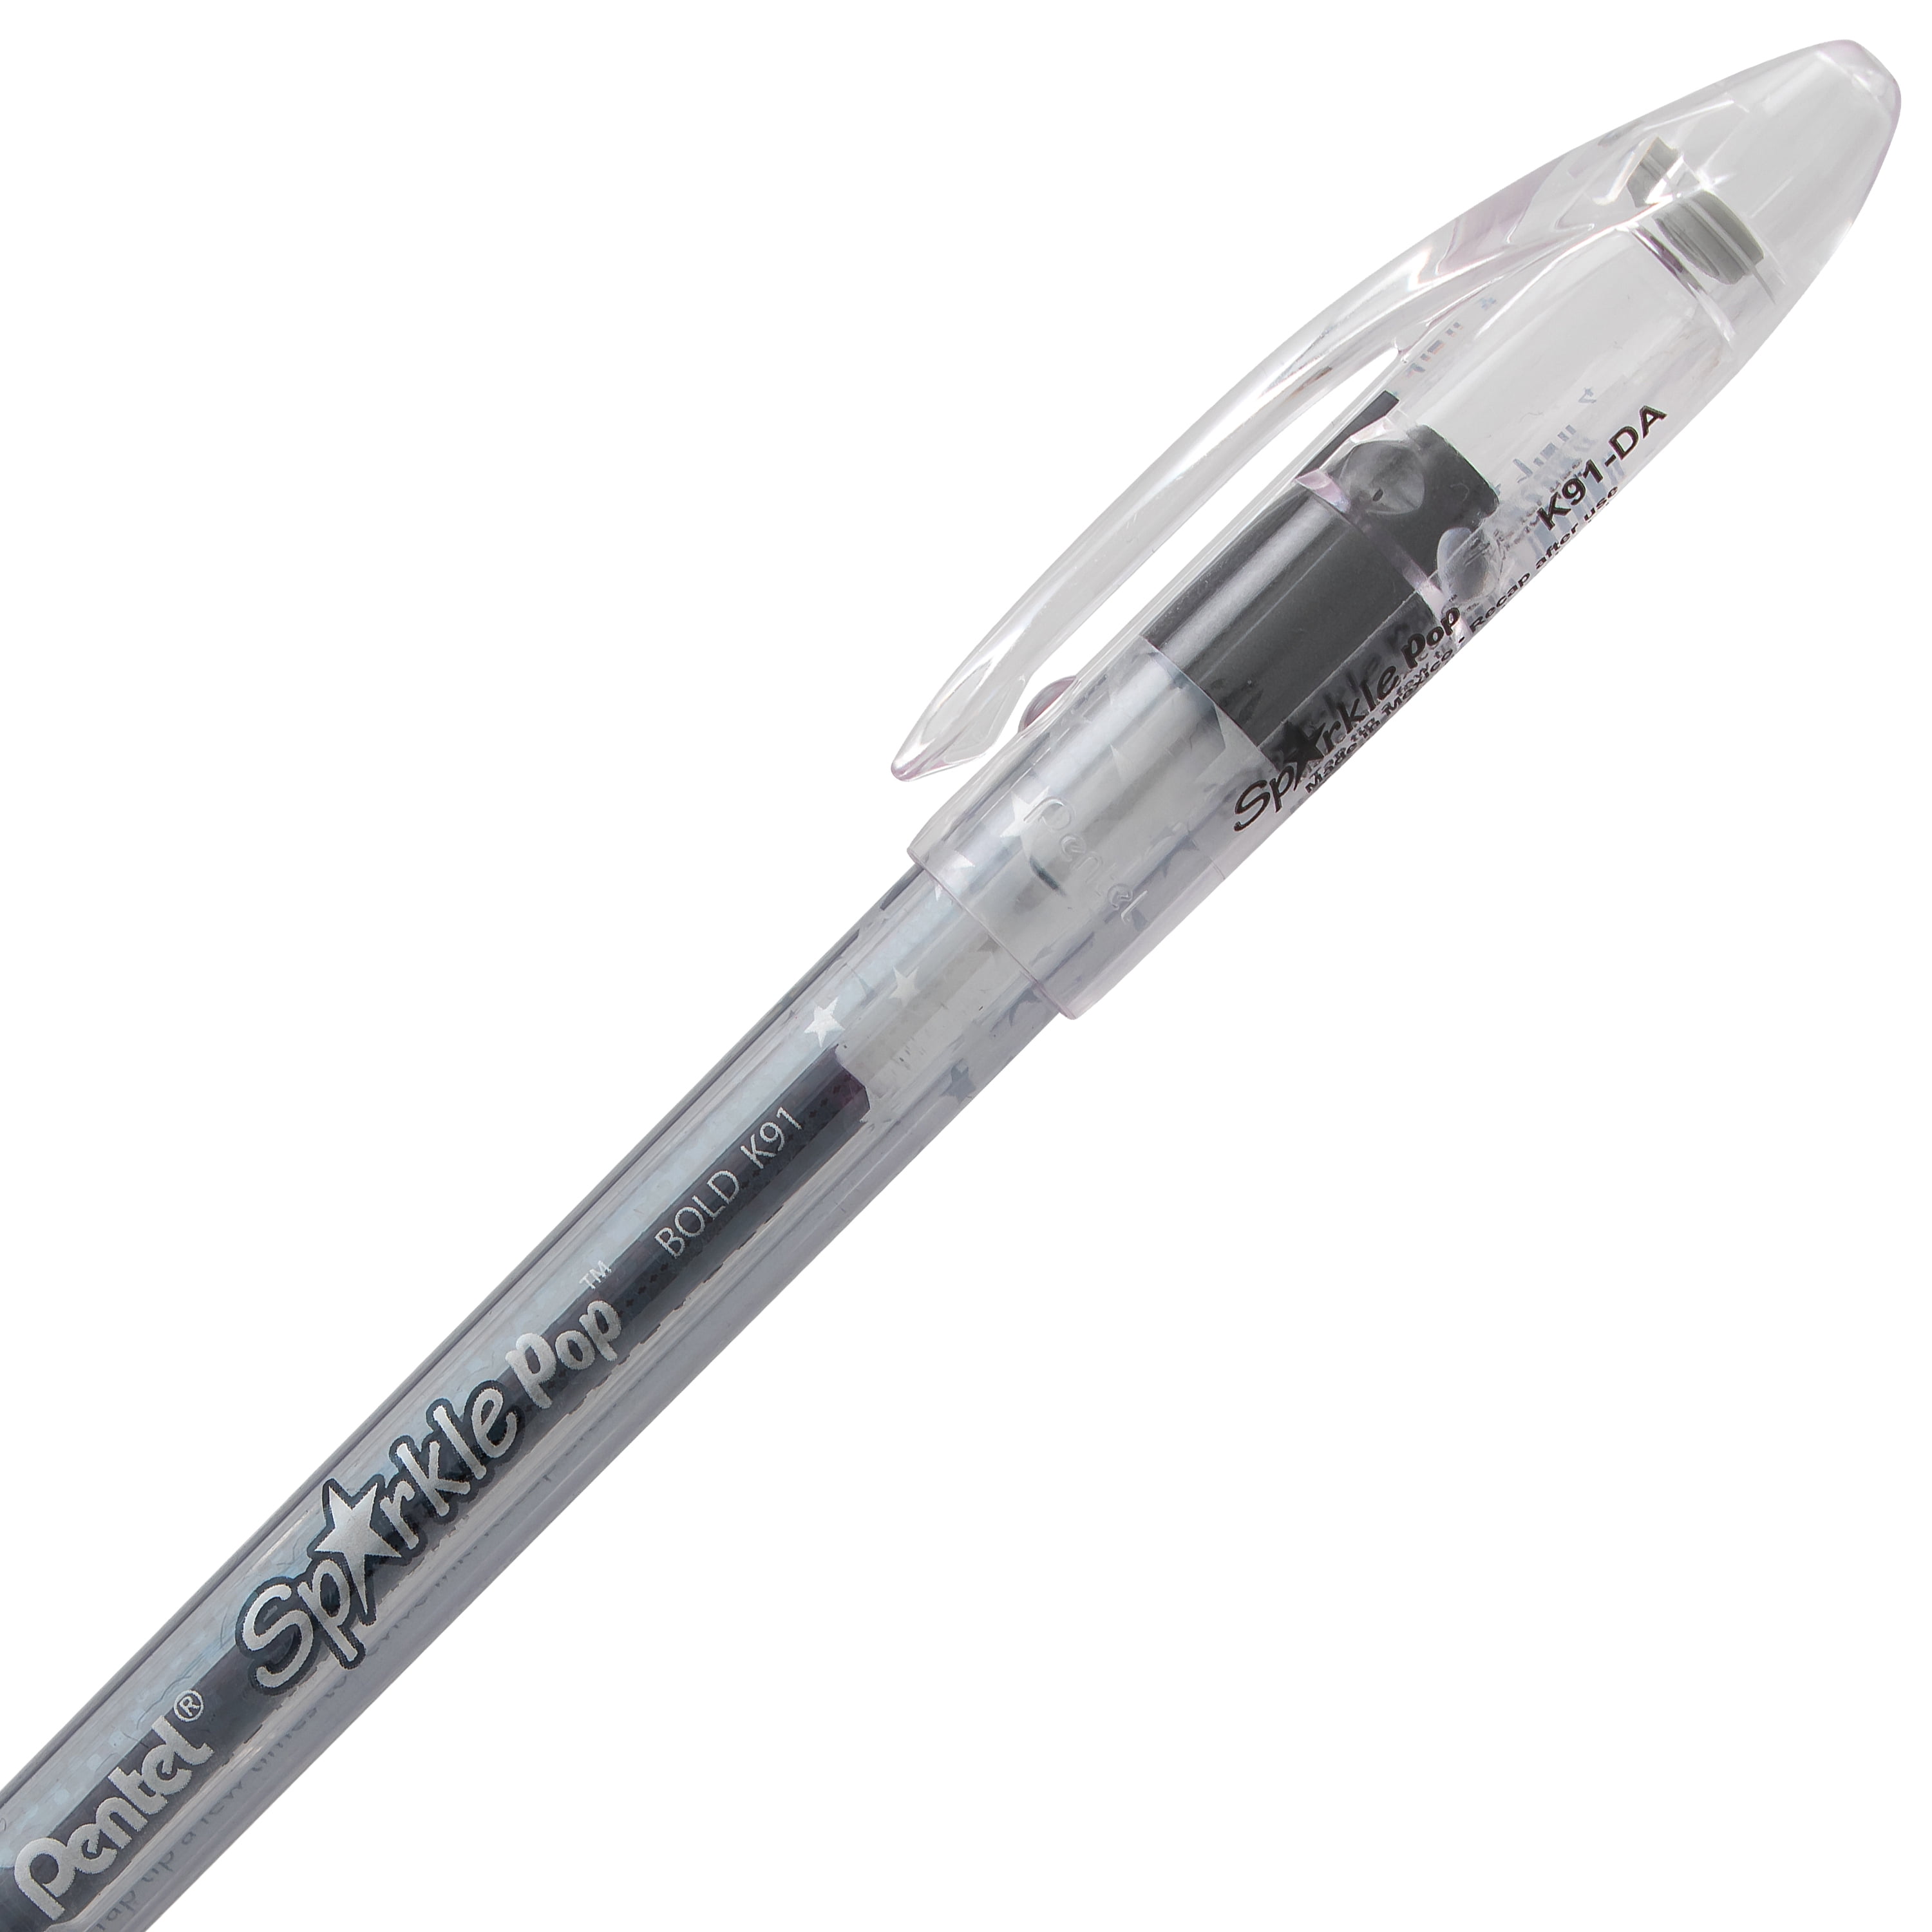 Pentel Sparkle Pop Metallic Gel Pen Set, 8-Colors